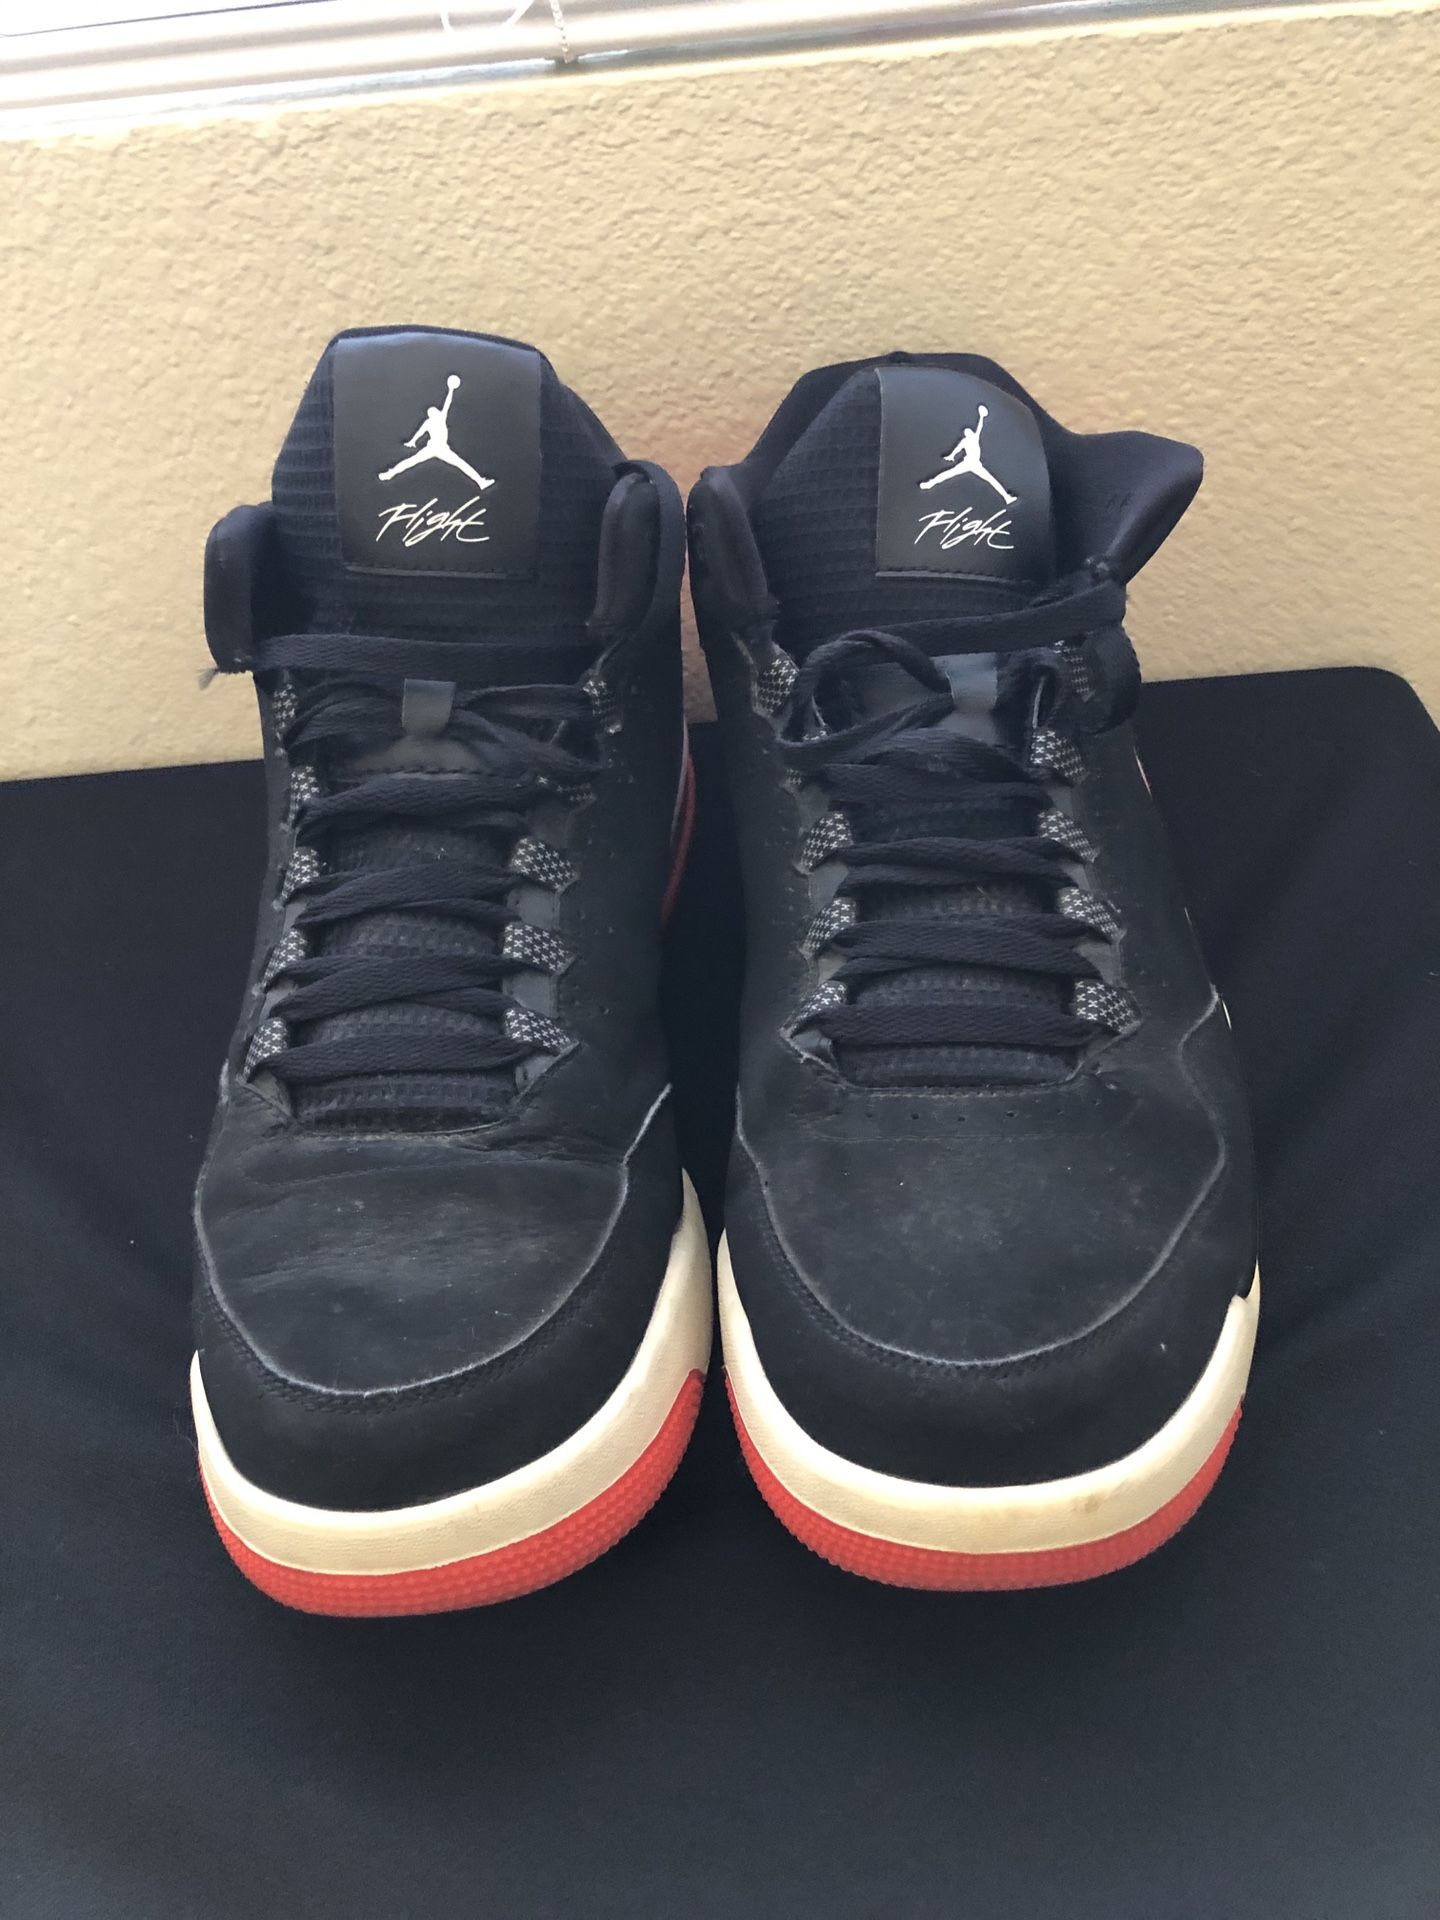 Men's Nike Air Jordan Flight Origin 2 Infrared 23 Off Court Shoes 705155-016 S12